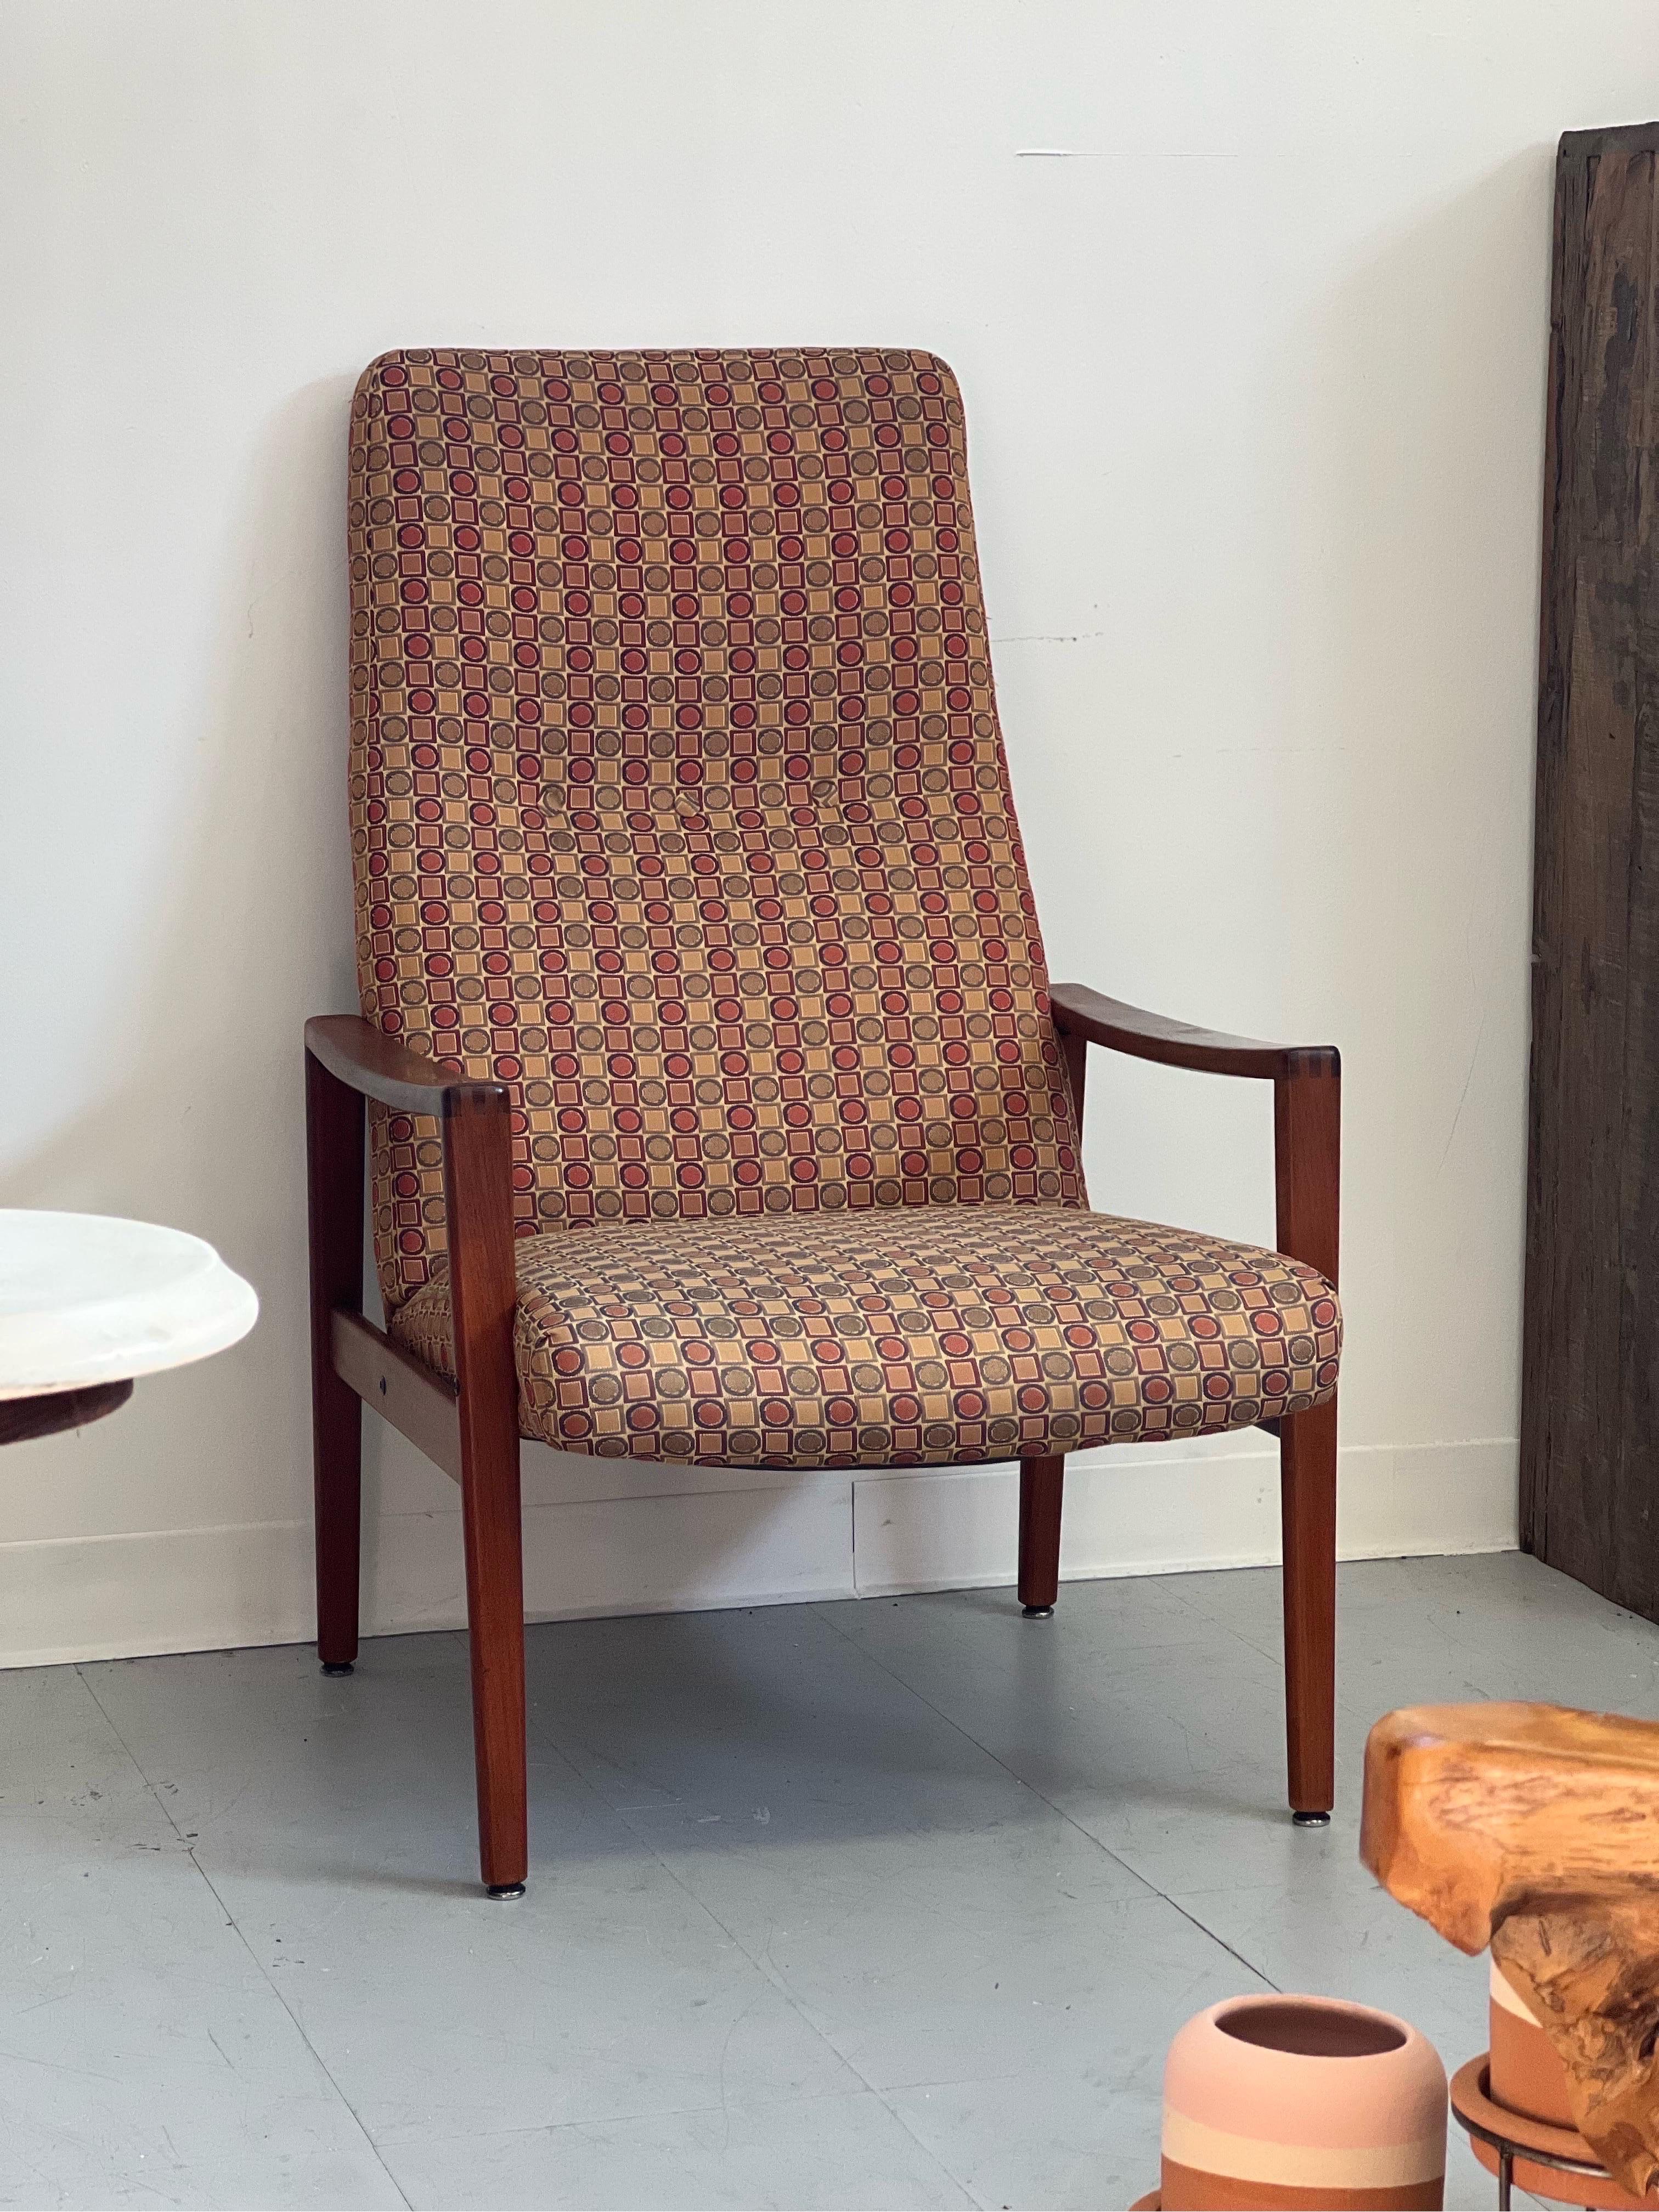 Vintage Danish Mid Century Modern Chair by Milo Baughman

Dimensions. 26 W ; 33 D ; 41 H